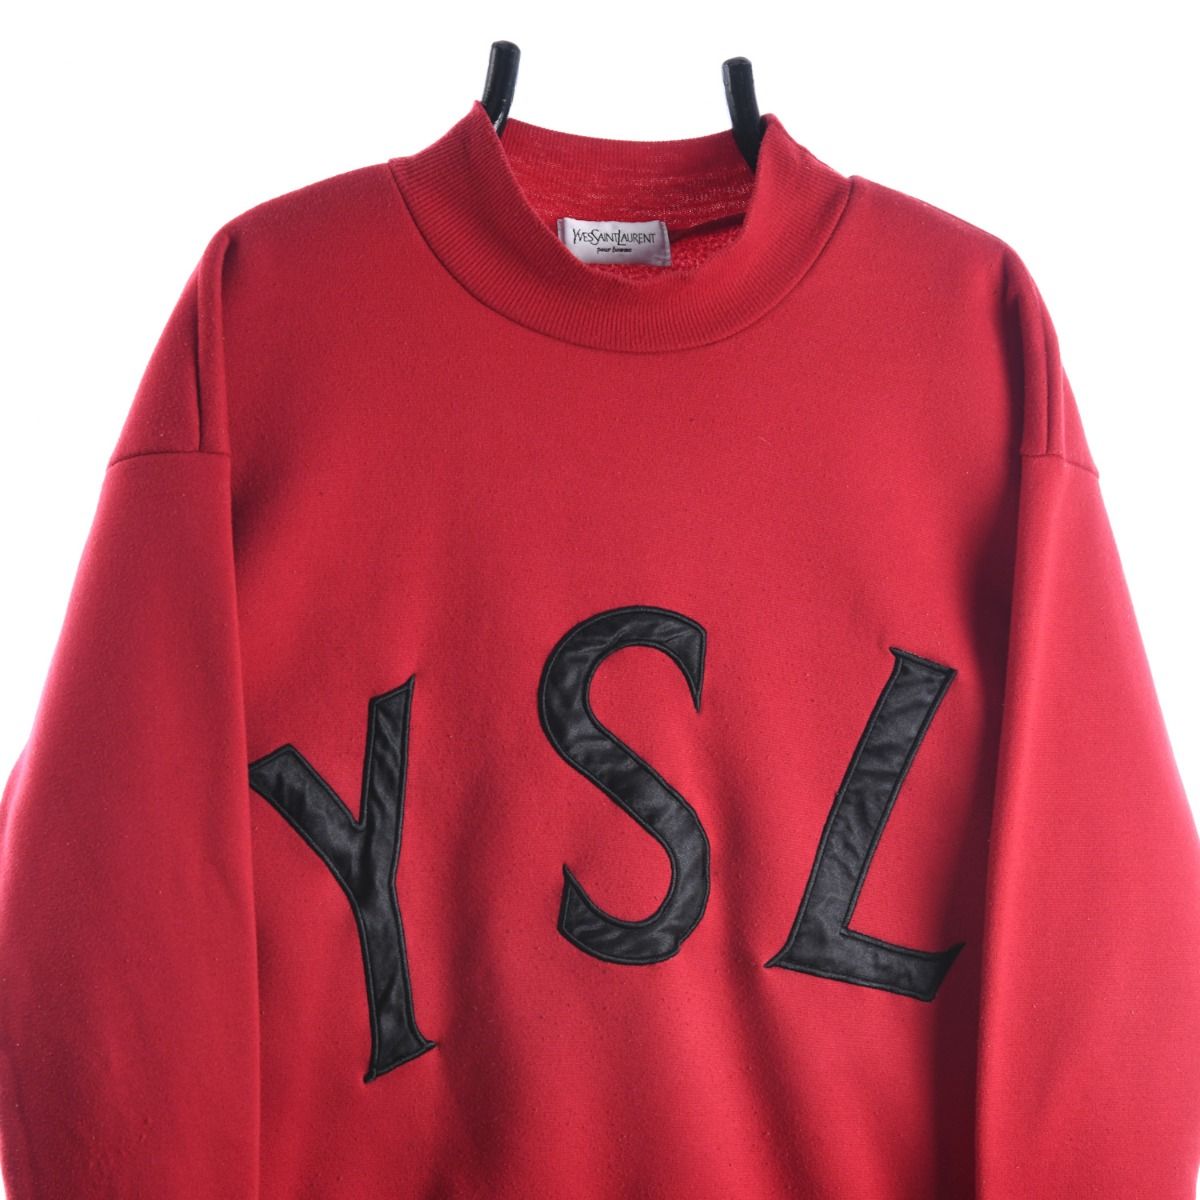 Yves Saint Laurent 'YSL' High Collar Sweatshirt